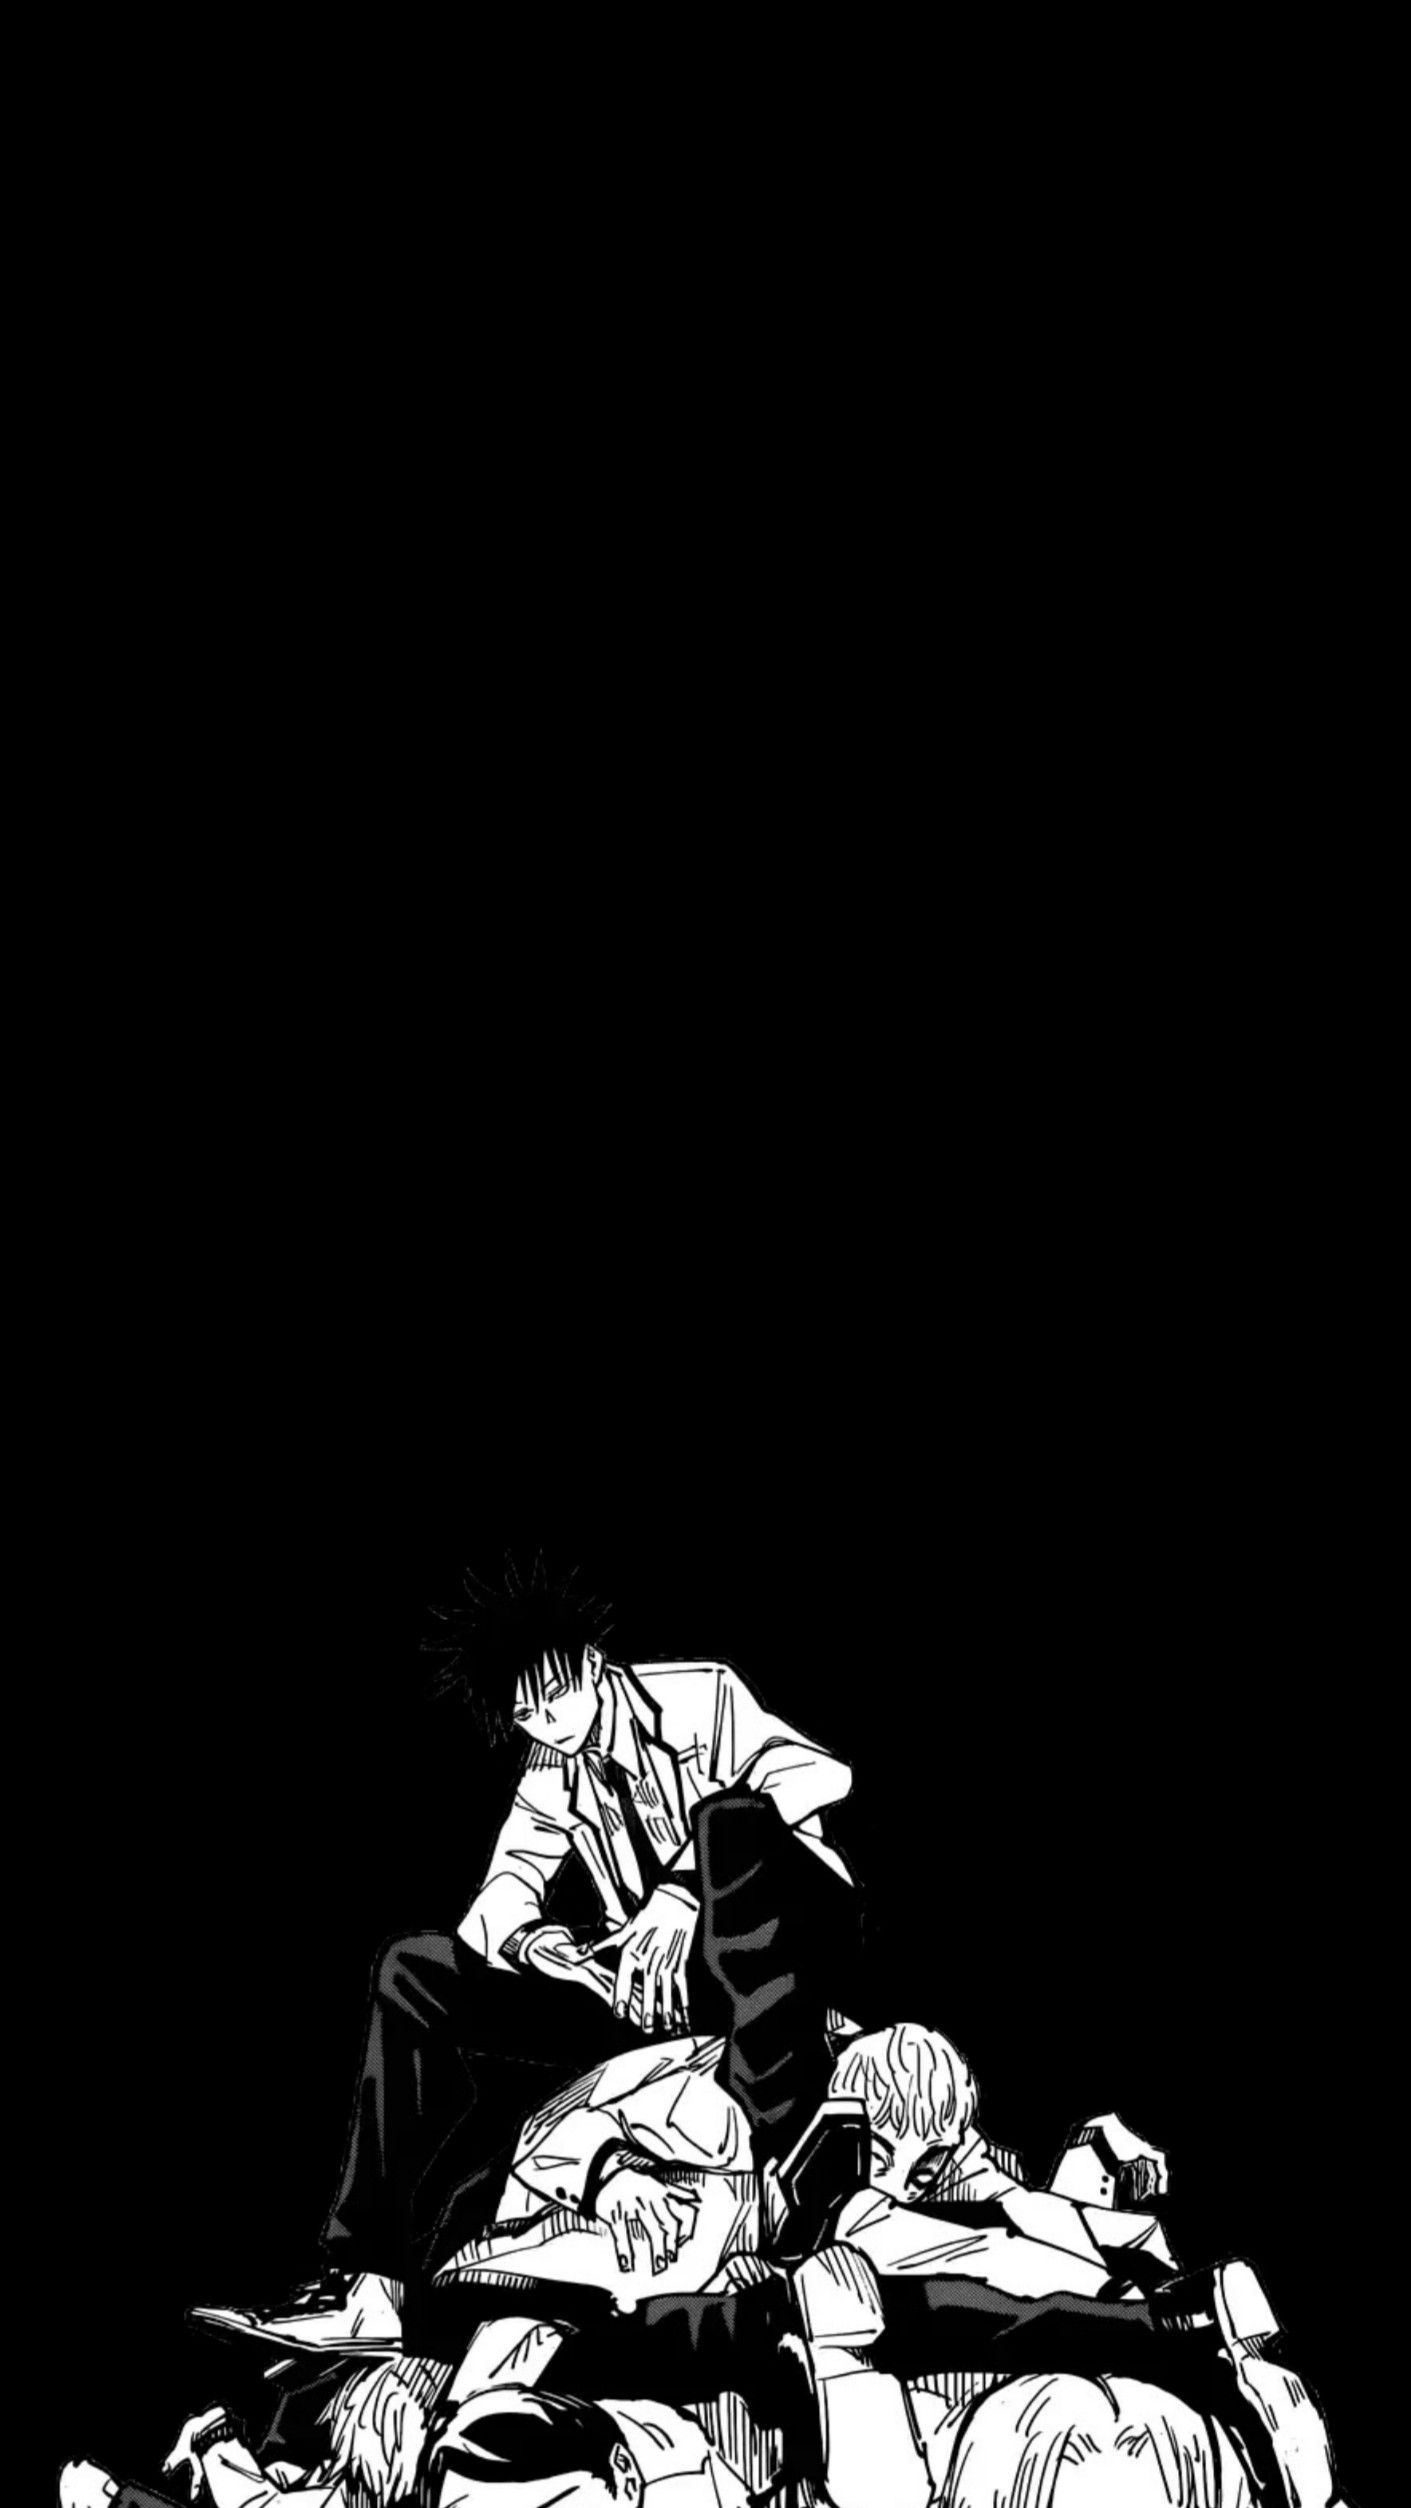 Jujutsu kaisen. Anime wallpaper, Anime background, Aesthetic anime